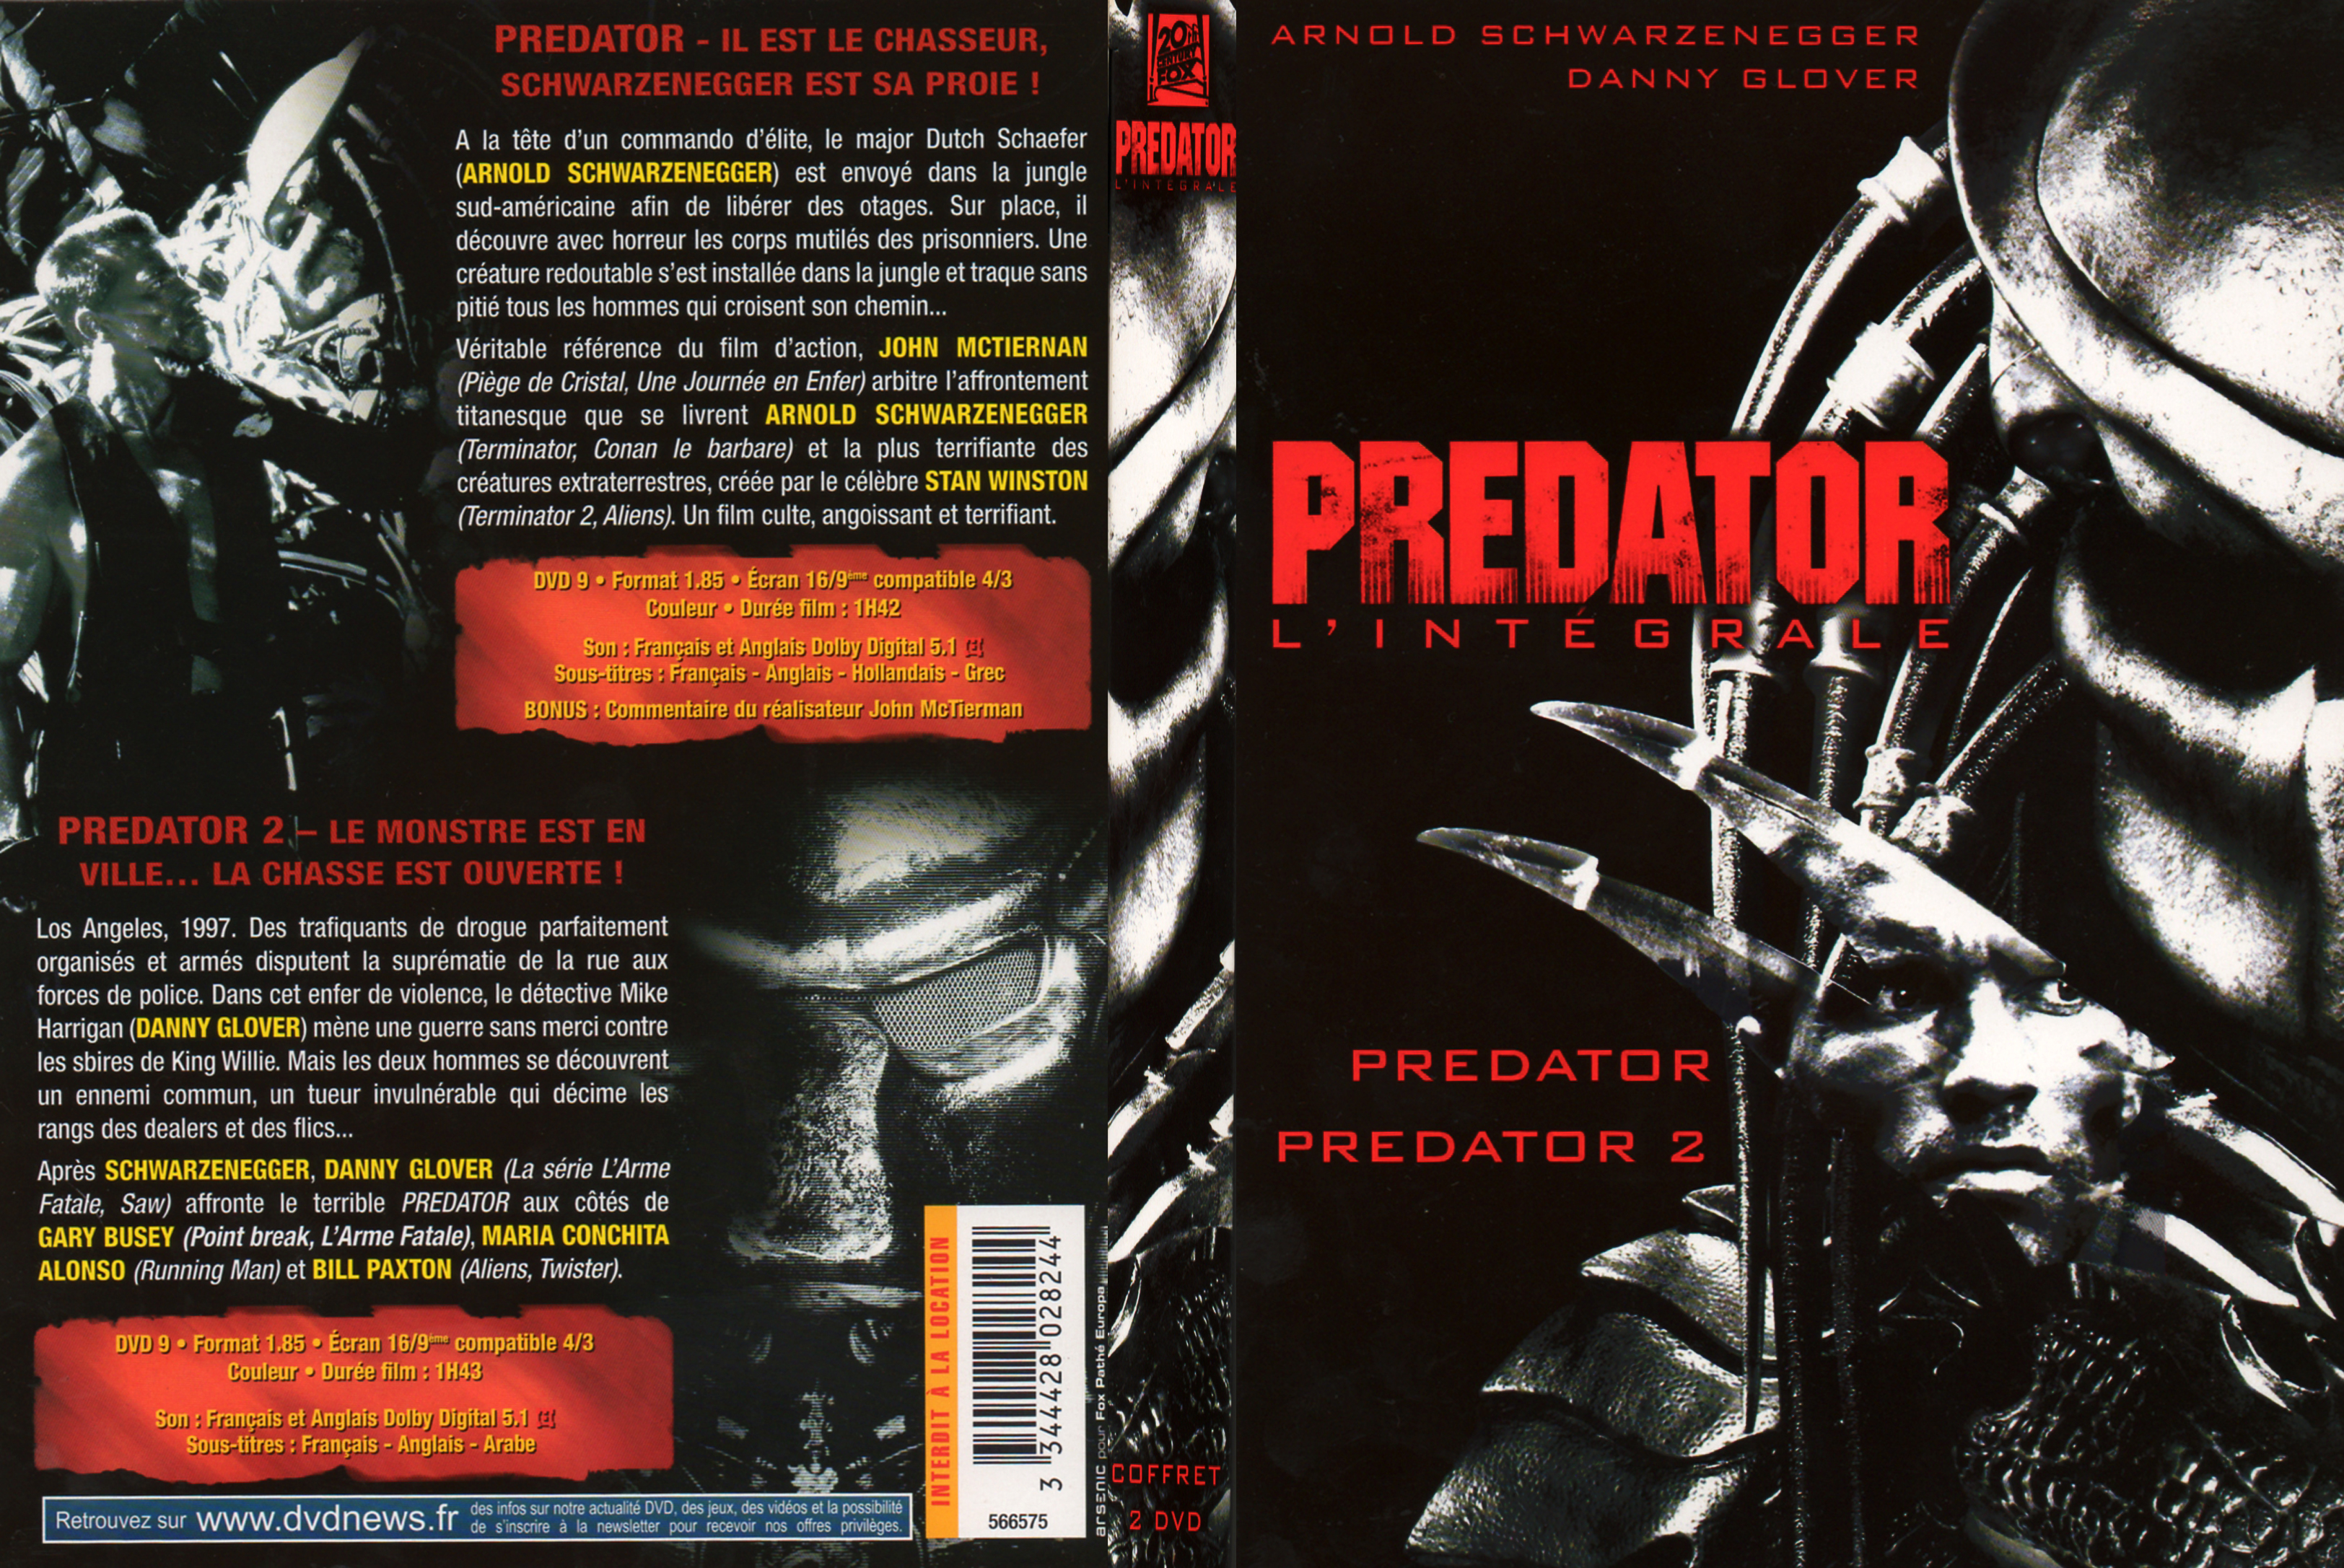 Jaquette DVD Predator 1 et 2